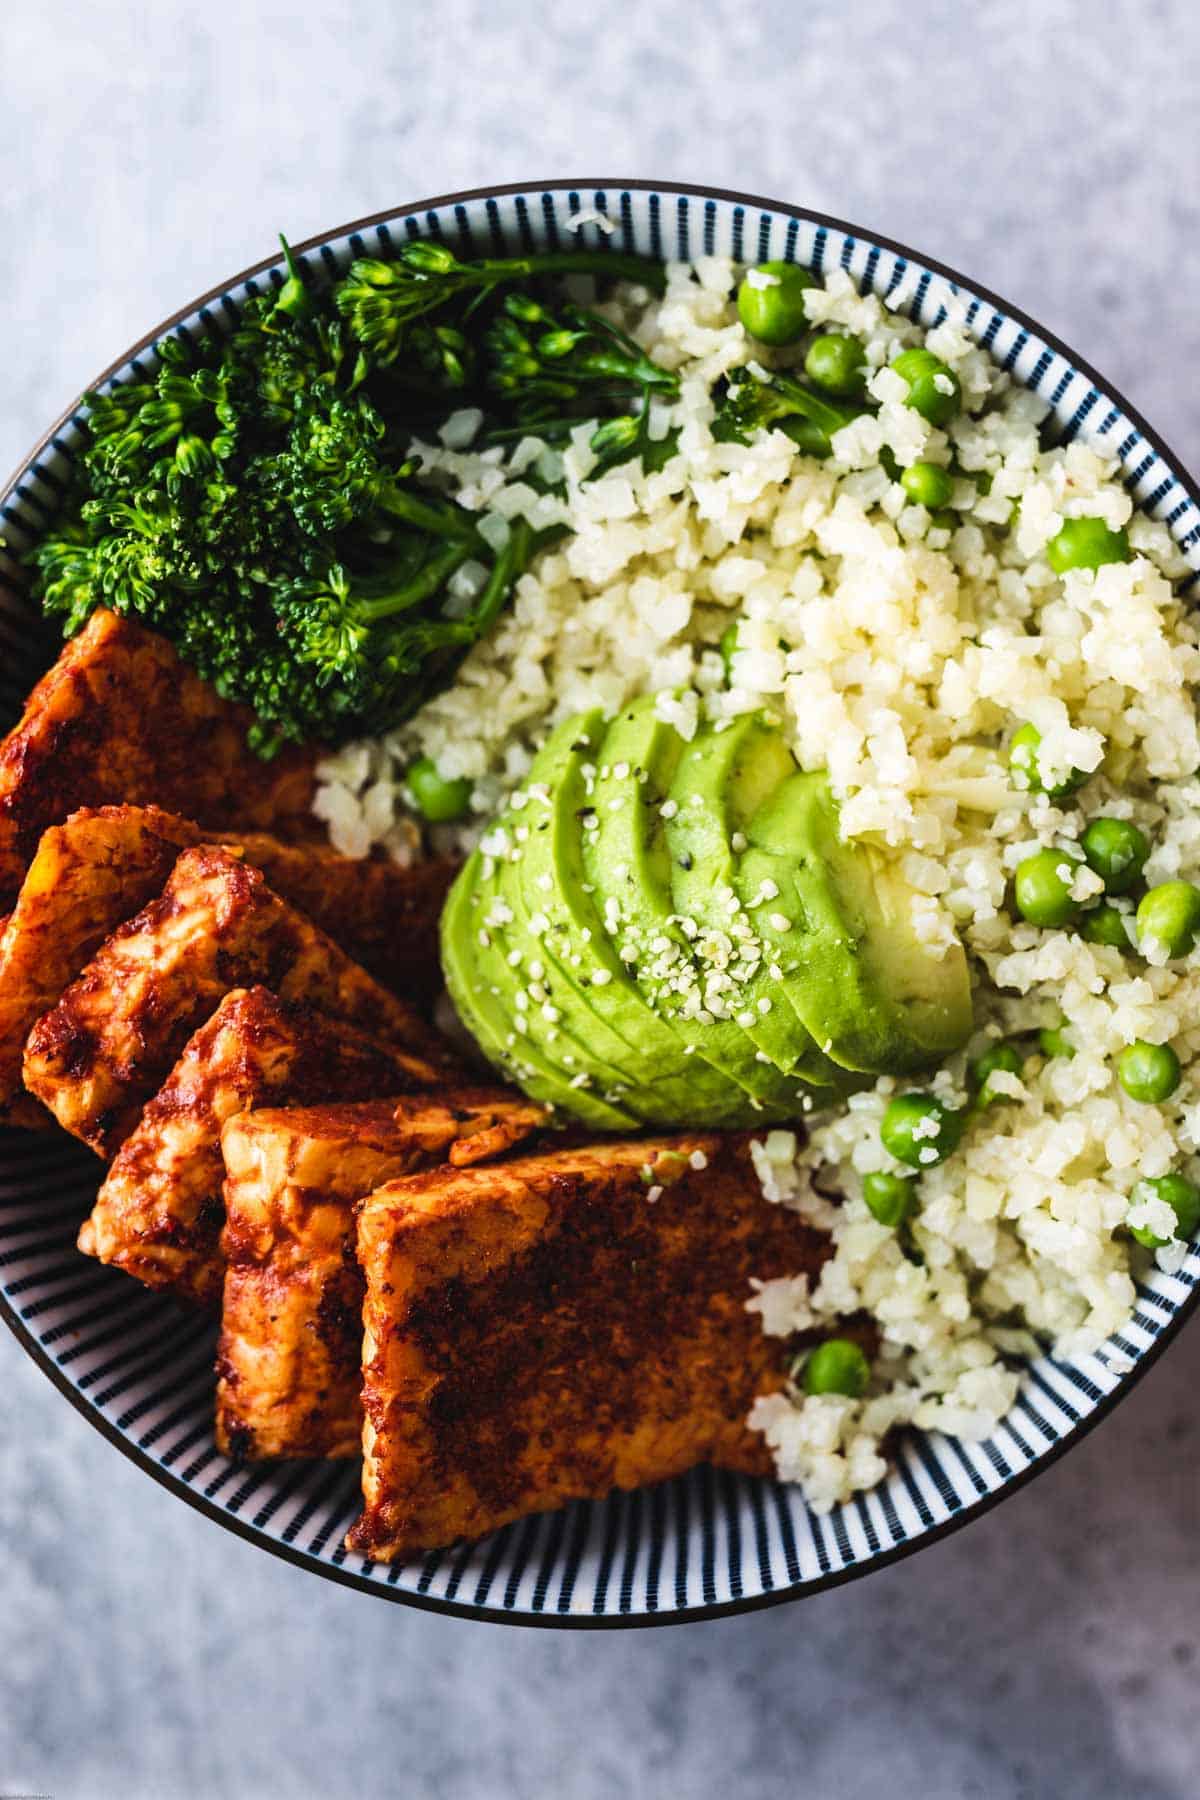 BBQ tempeh, cauliflower rice with green peas, avocado, and broccoli.